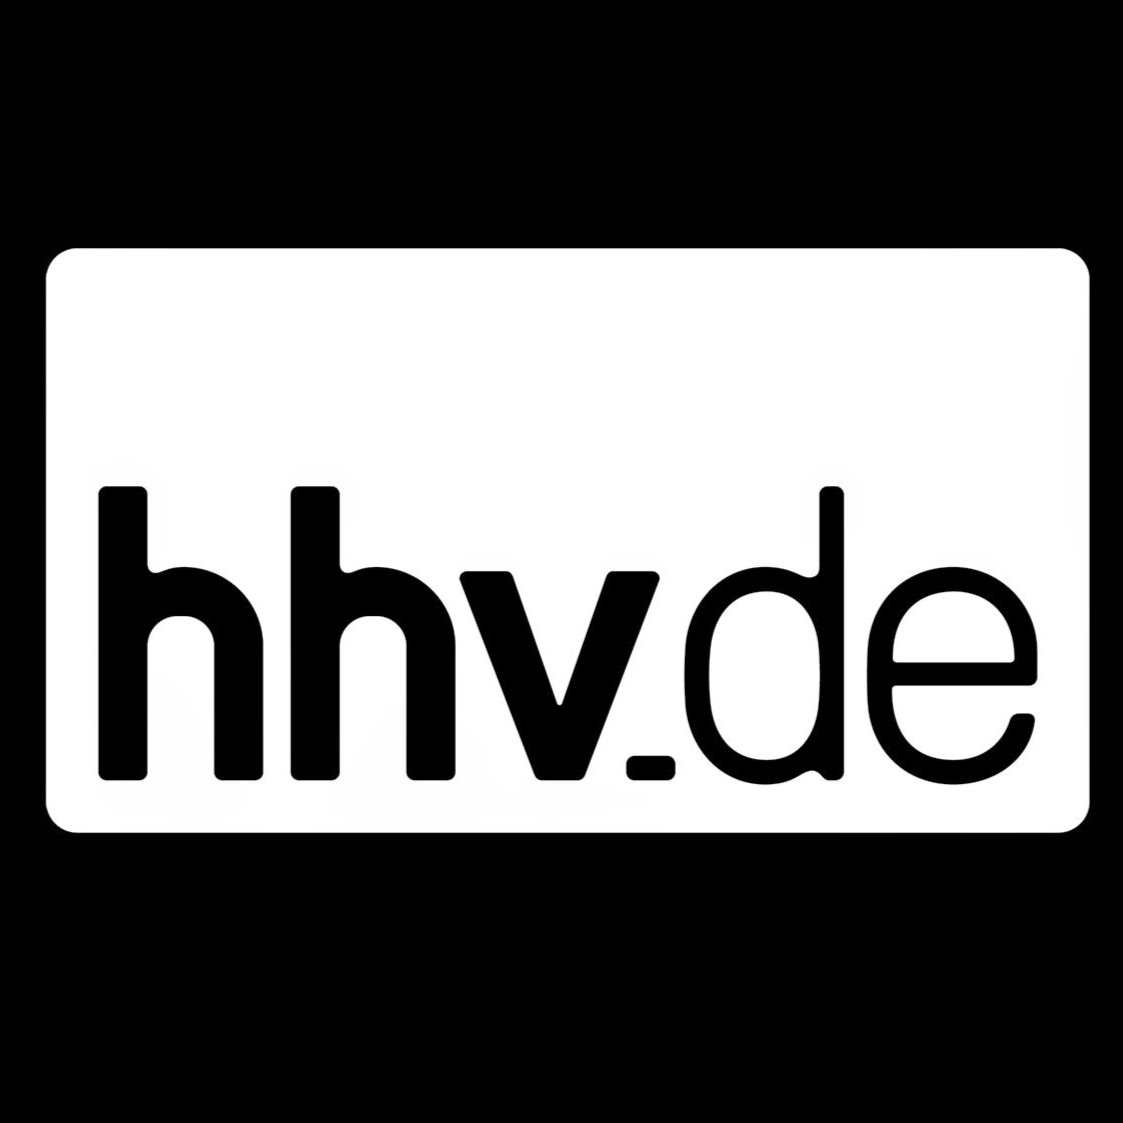 HHV - Vinyl / Streetwear / Sneakers & more Vouchers Codes